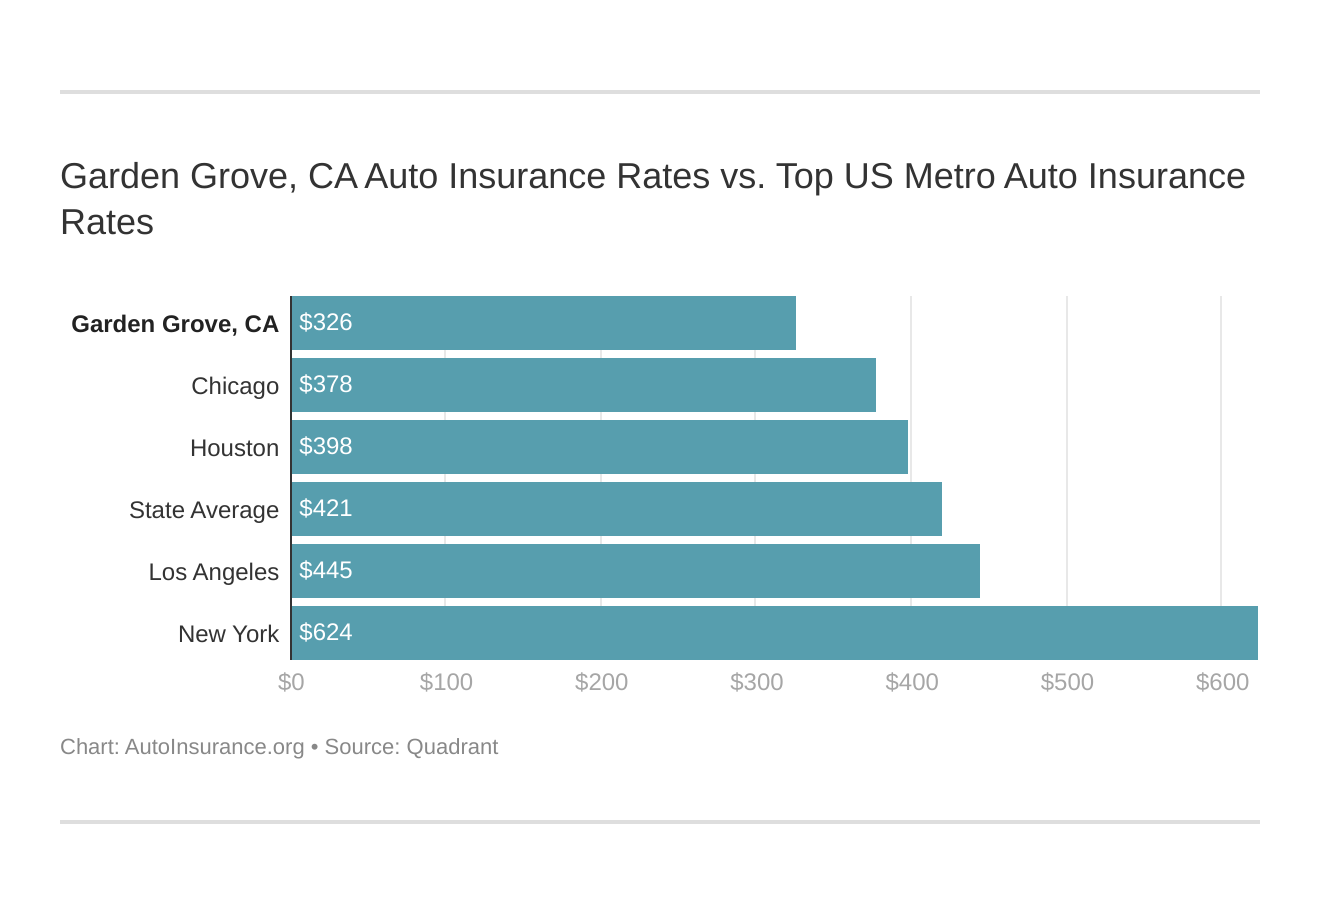 Garden Grove, CA Auto Insurance Rates vs. Top US Metro Auto Insurance Rates